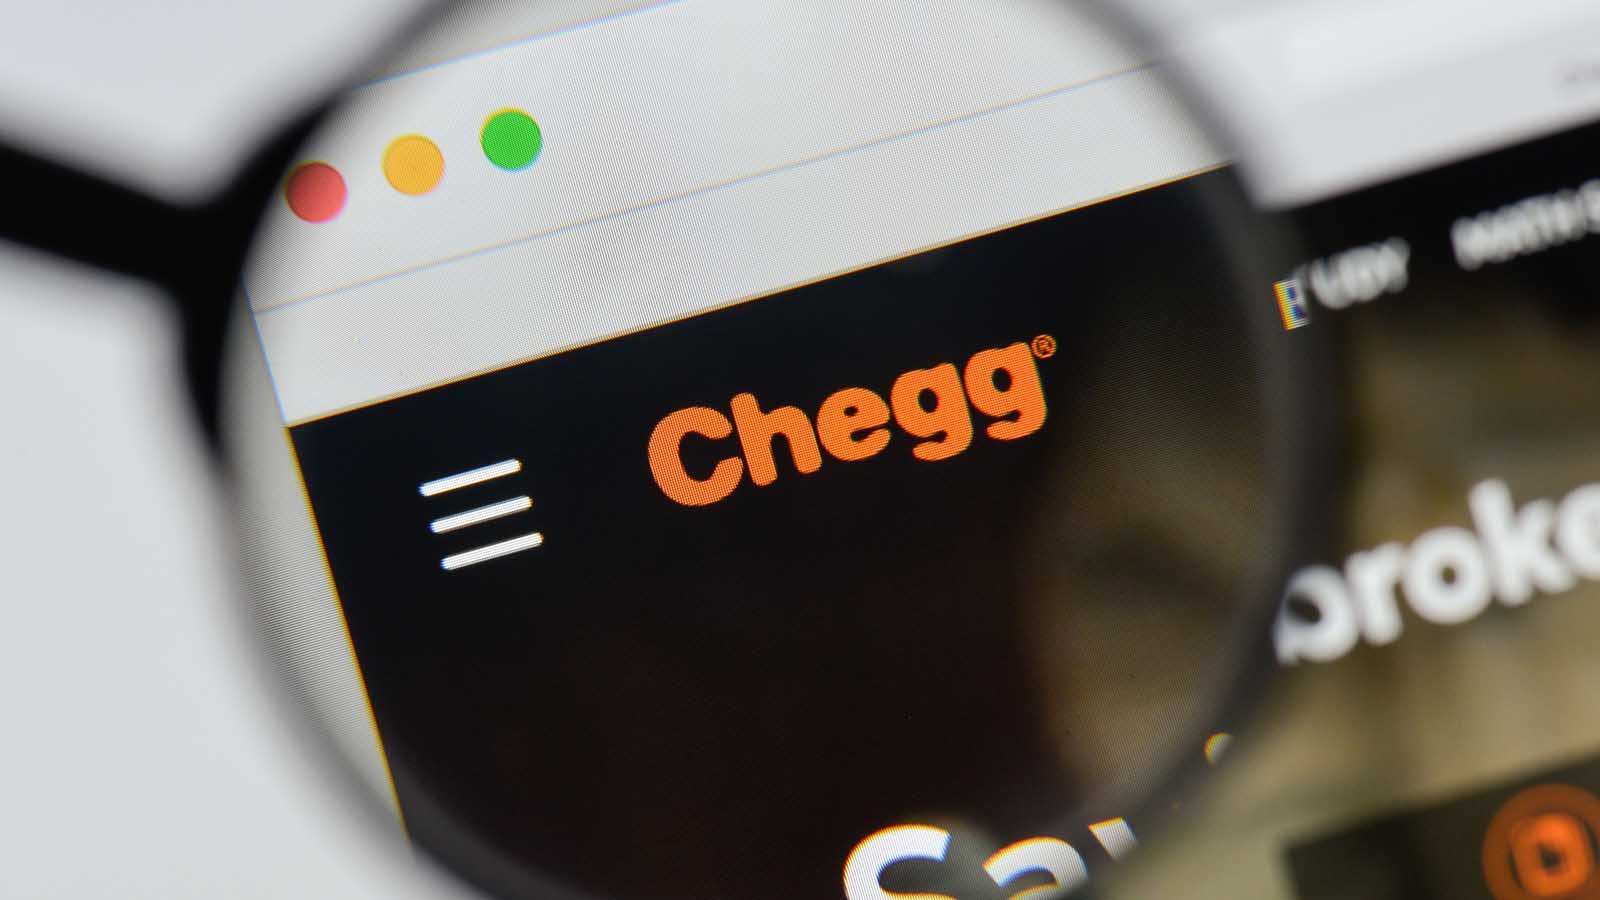 Chegg (CHGG) Stock Gains 13% on Stock Repurchase Plan